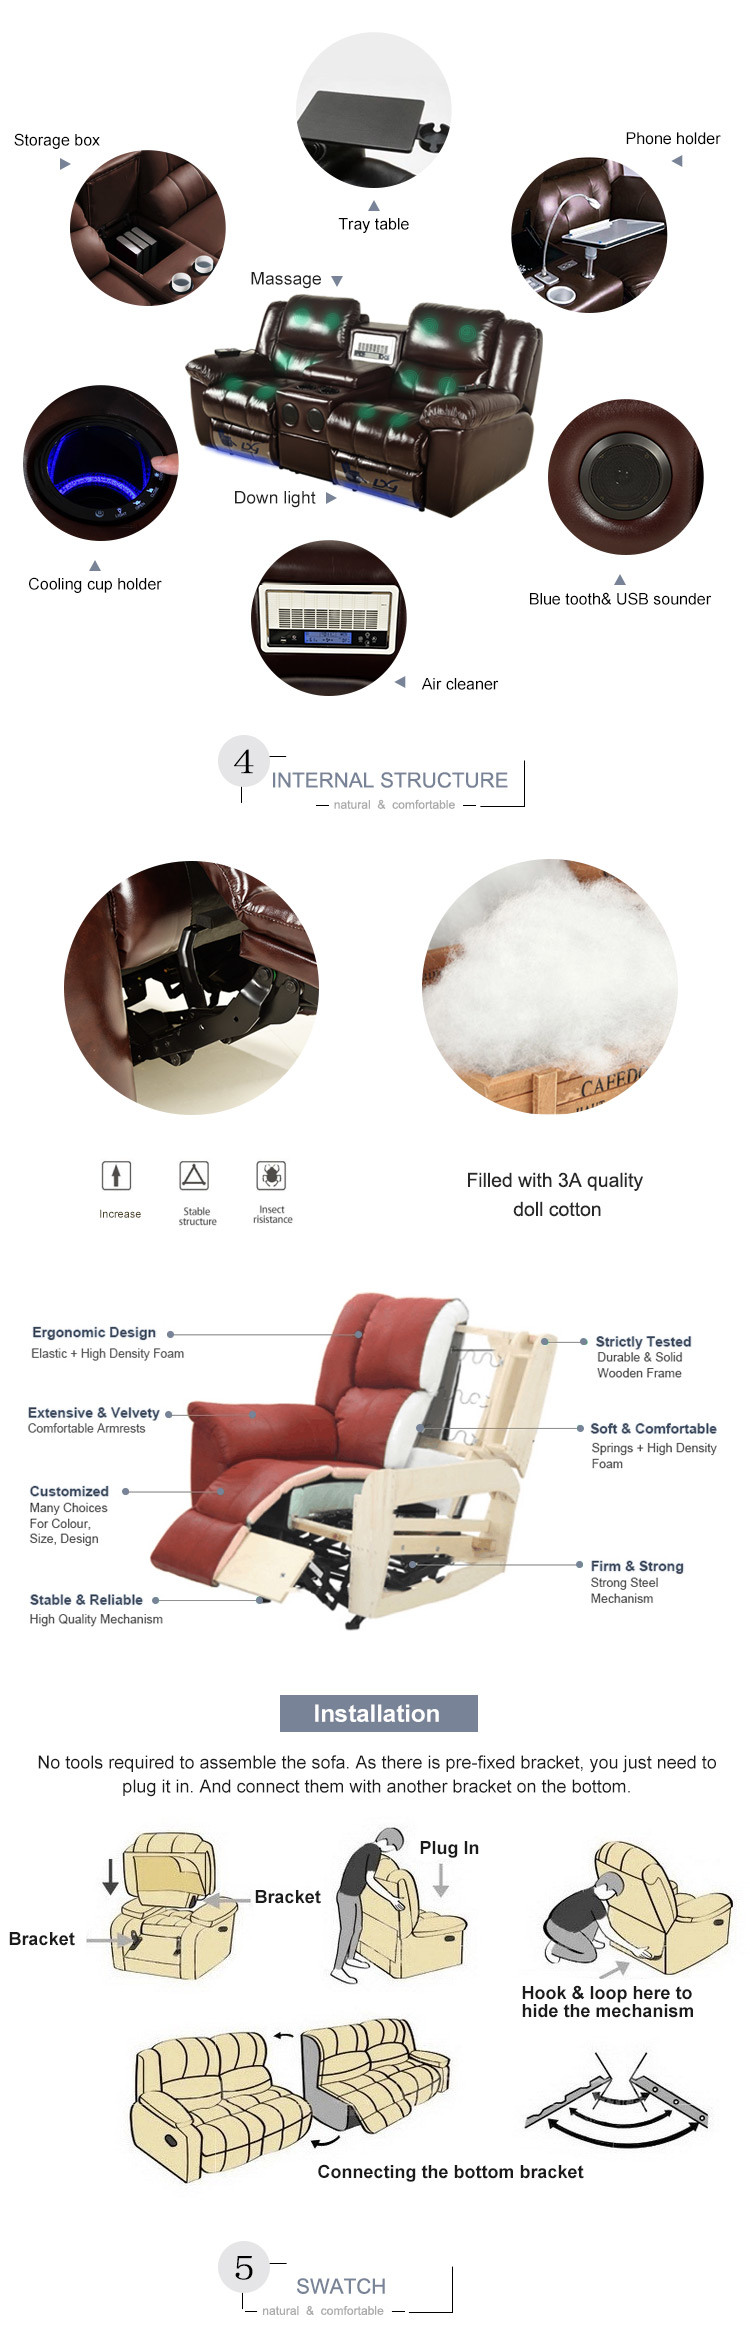 European Style Contemporary Modern Fabric Recliner Sofa Chair